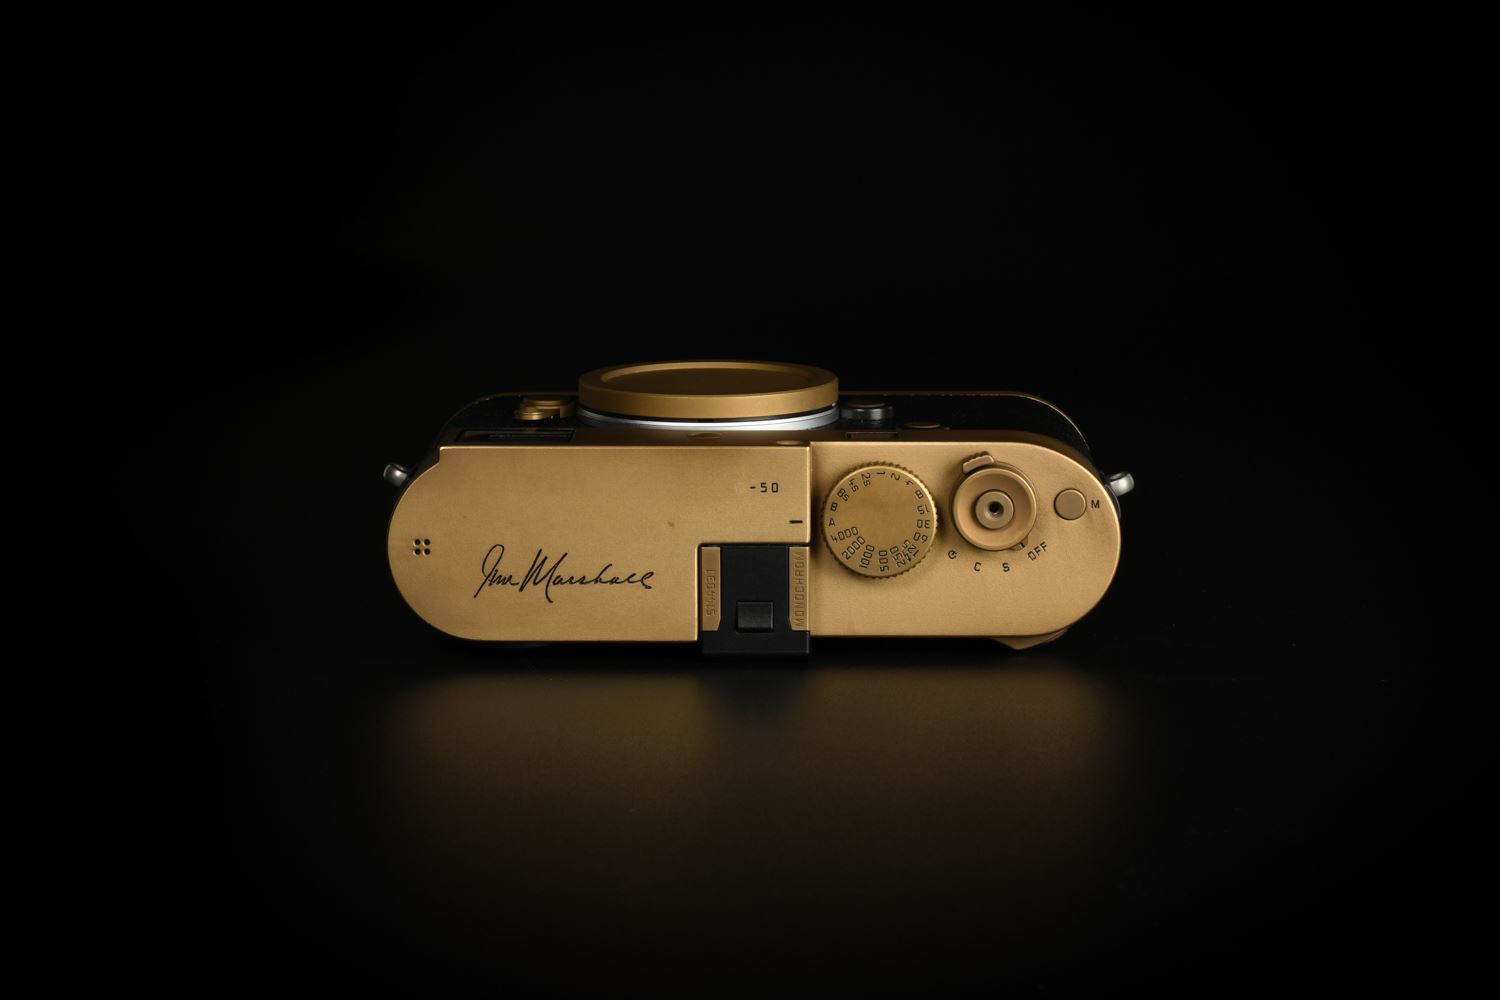 Picture of Leica M Monochrom "Jim Marshall" Set